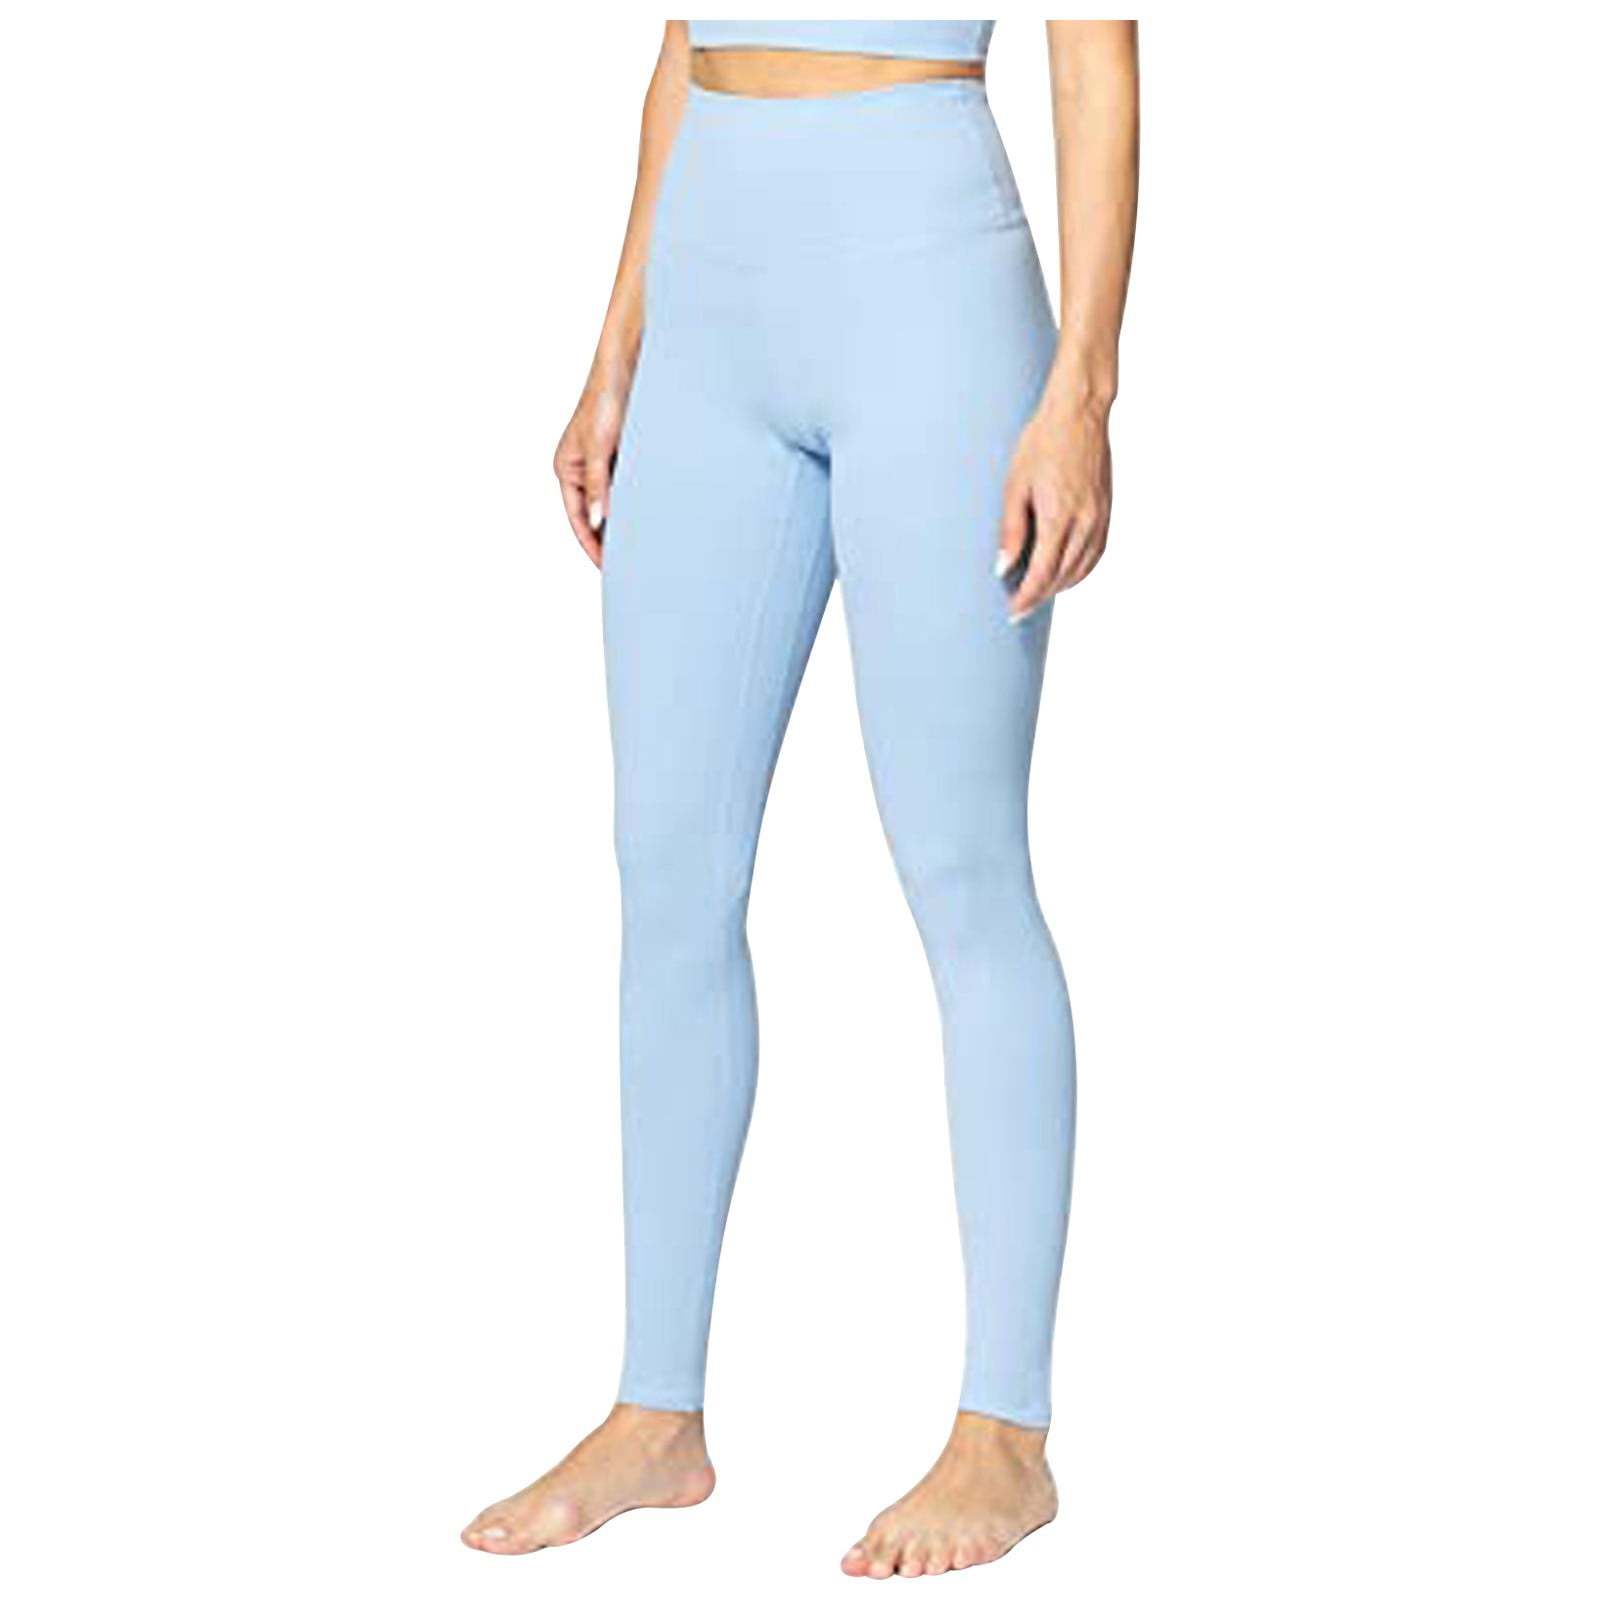 2DXuixsh Girls Yoga Pants Size 14-16 with Pockets Women's Leggings